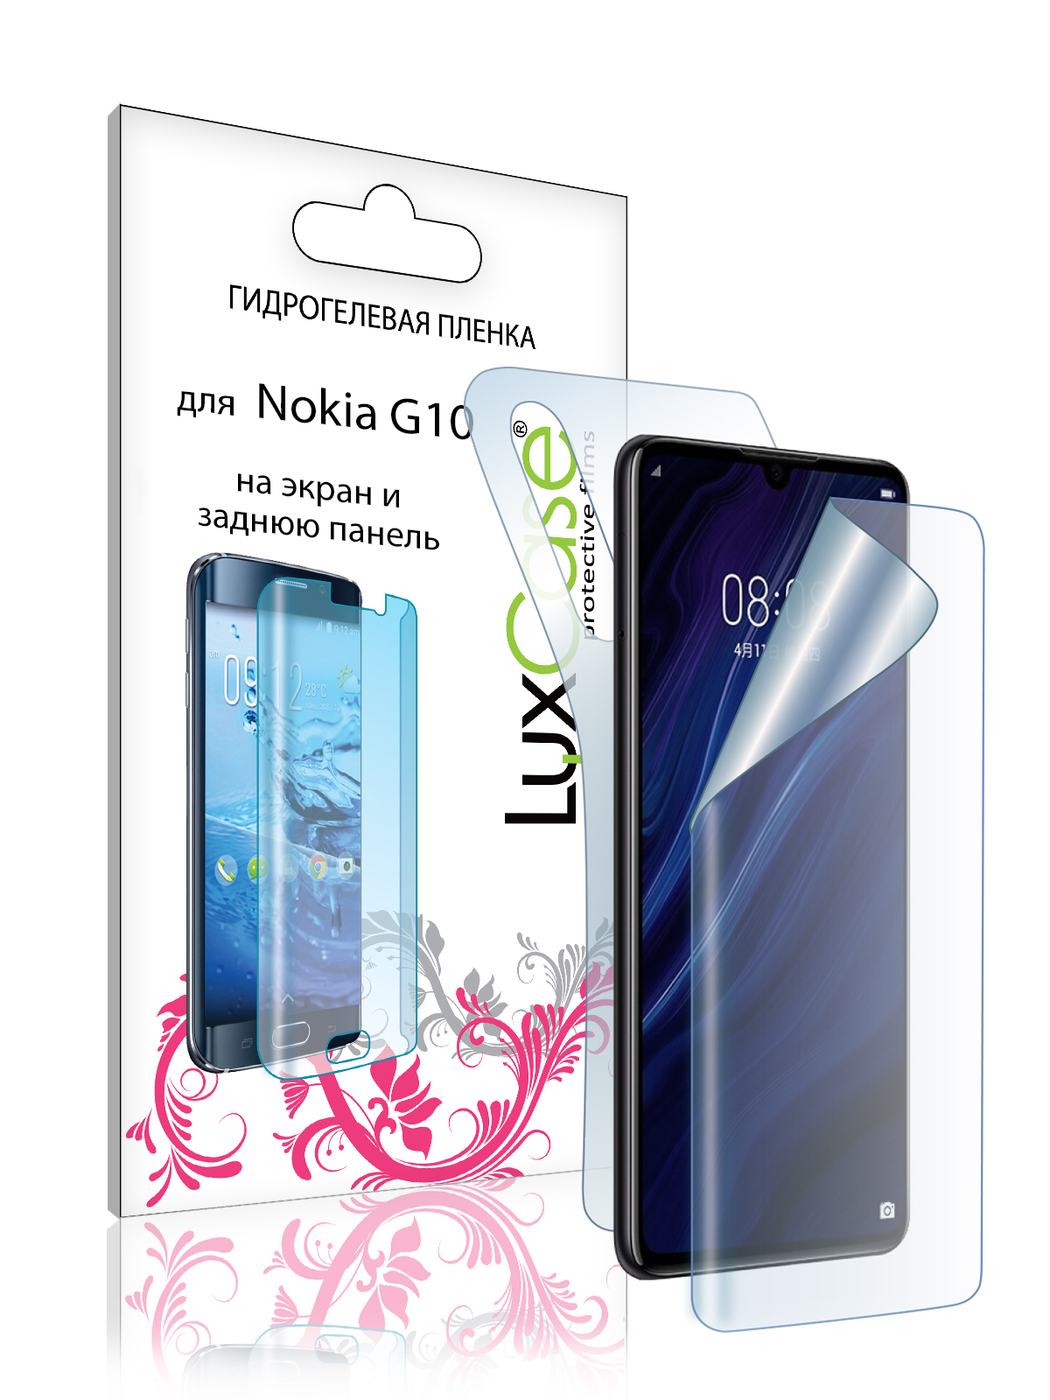 Пленка гидрогелевая LuxCase для Nokia G10 Front and Back Transparent 86391 гидрогелевая пленка luxcase для tcl 305 0 14mm transparent front and back 90593